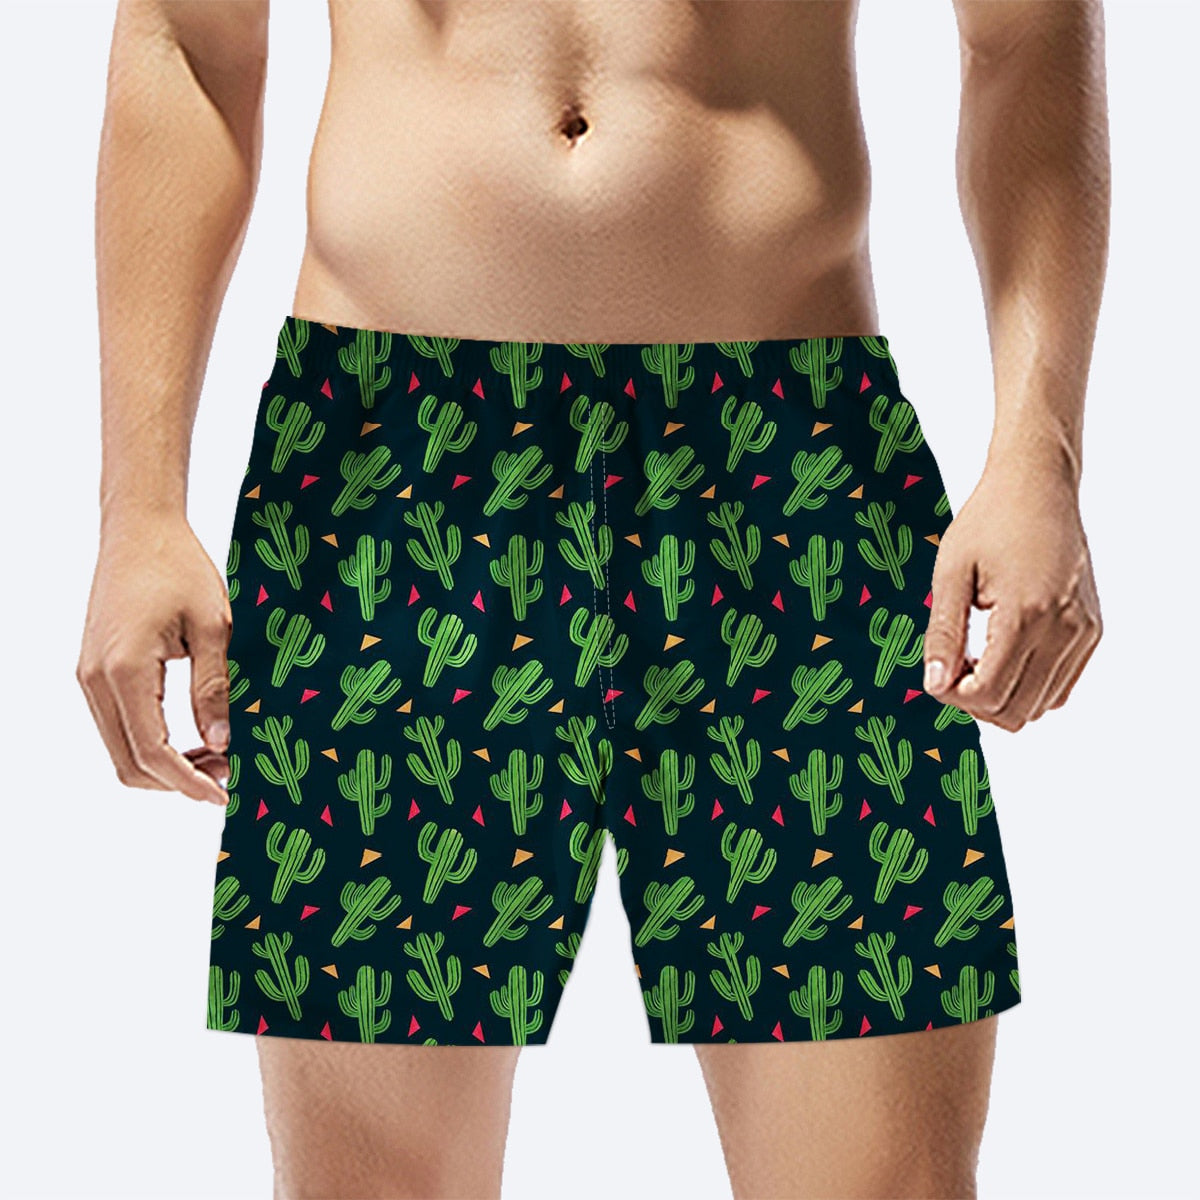 Men Cactus Printed Beach Shorts Quick Dry Running Shorts Swimwear Swimsuit Swim Trunks Beachwear Sports Shorts Board Shorts